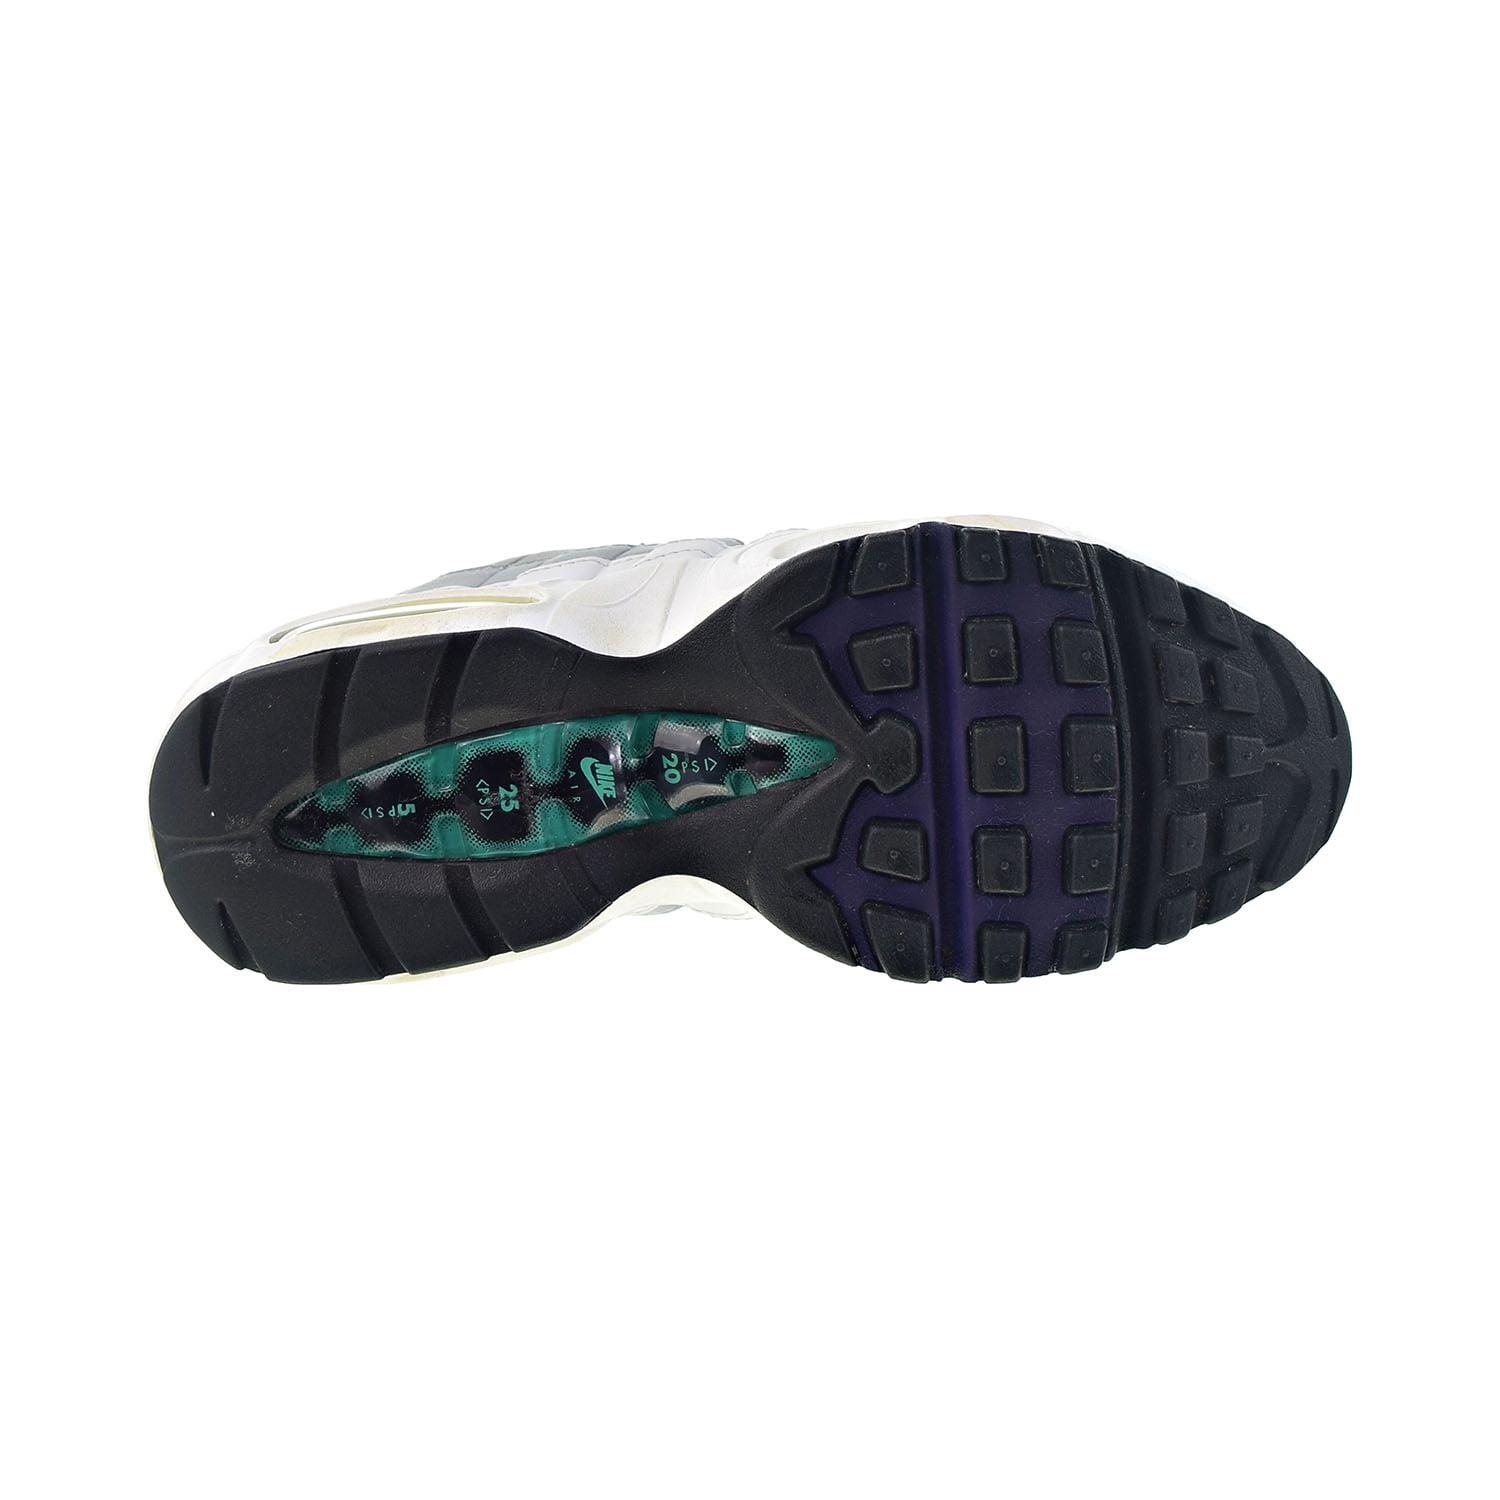 Andrew Halliday Cha mezcla Nike Air Max 95 "Grape" Women's Shoes White-Court Purple-Emerald Green  307960-101 - Walmart.com